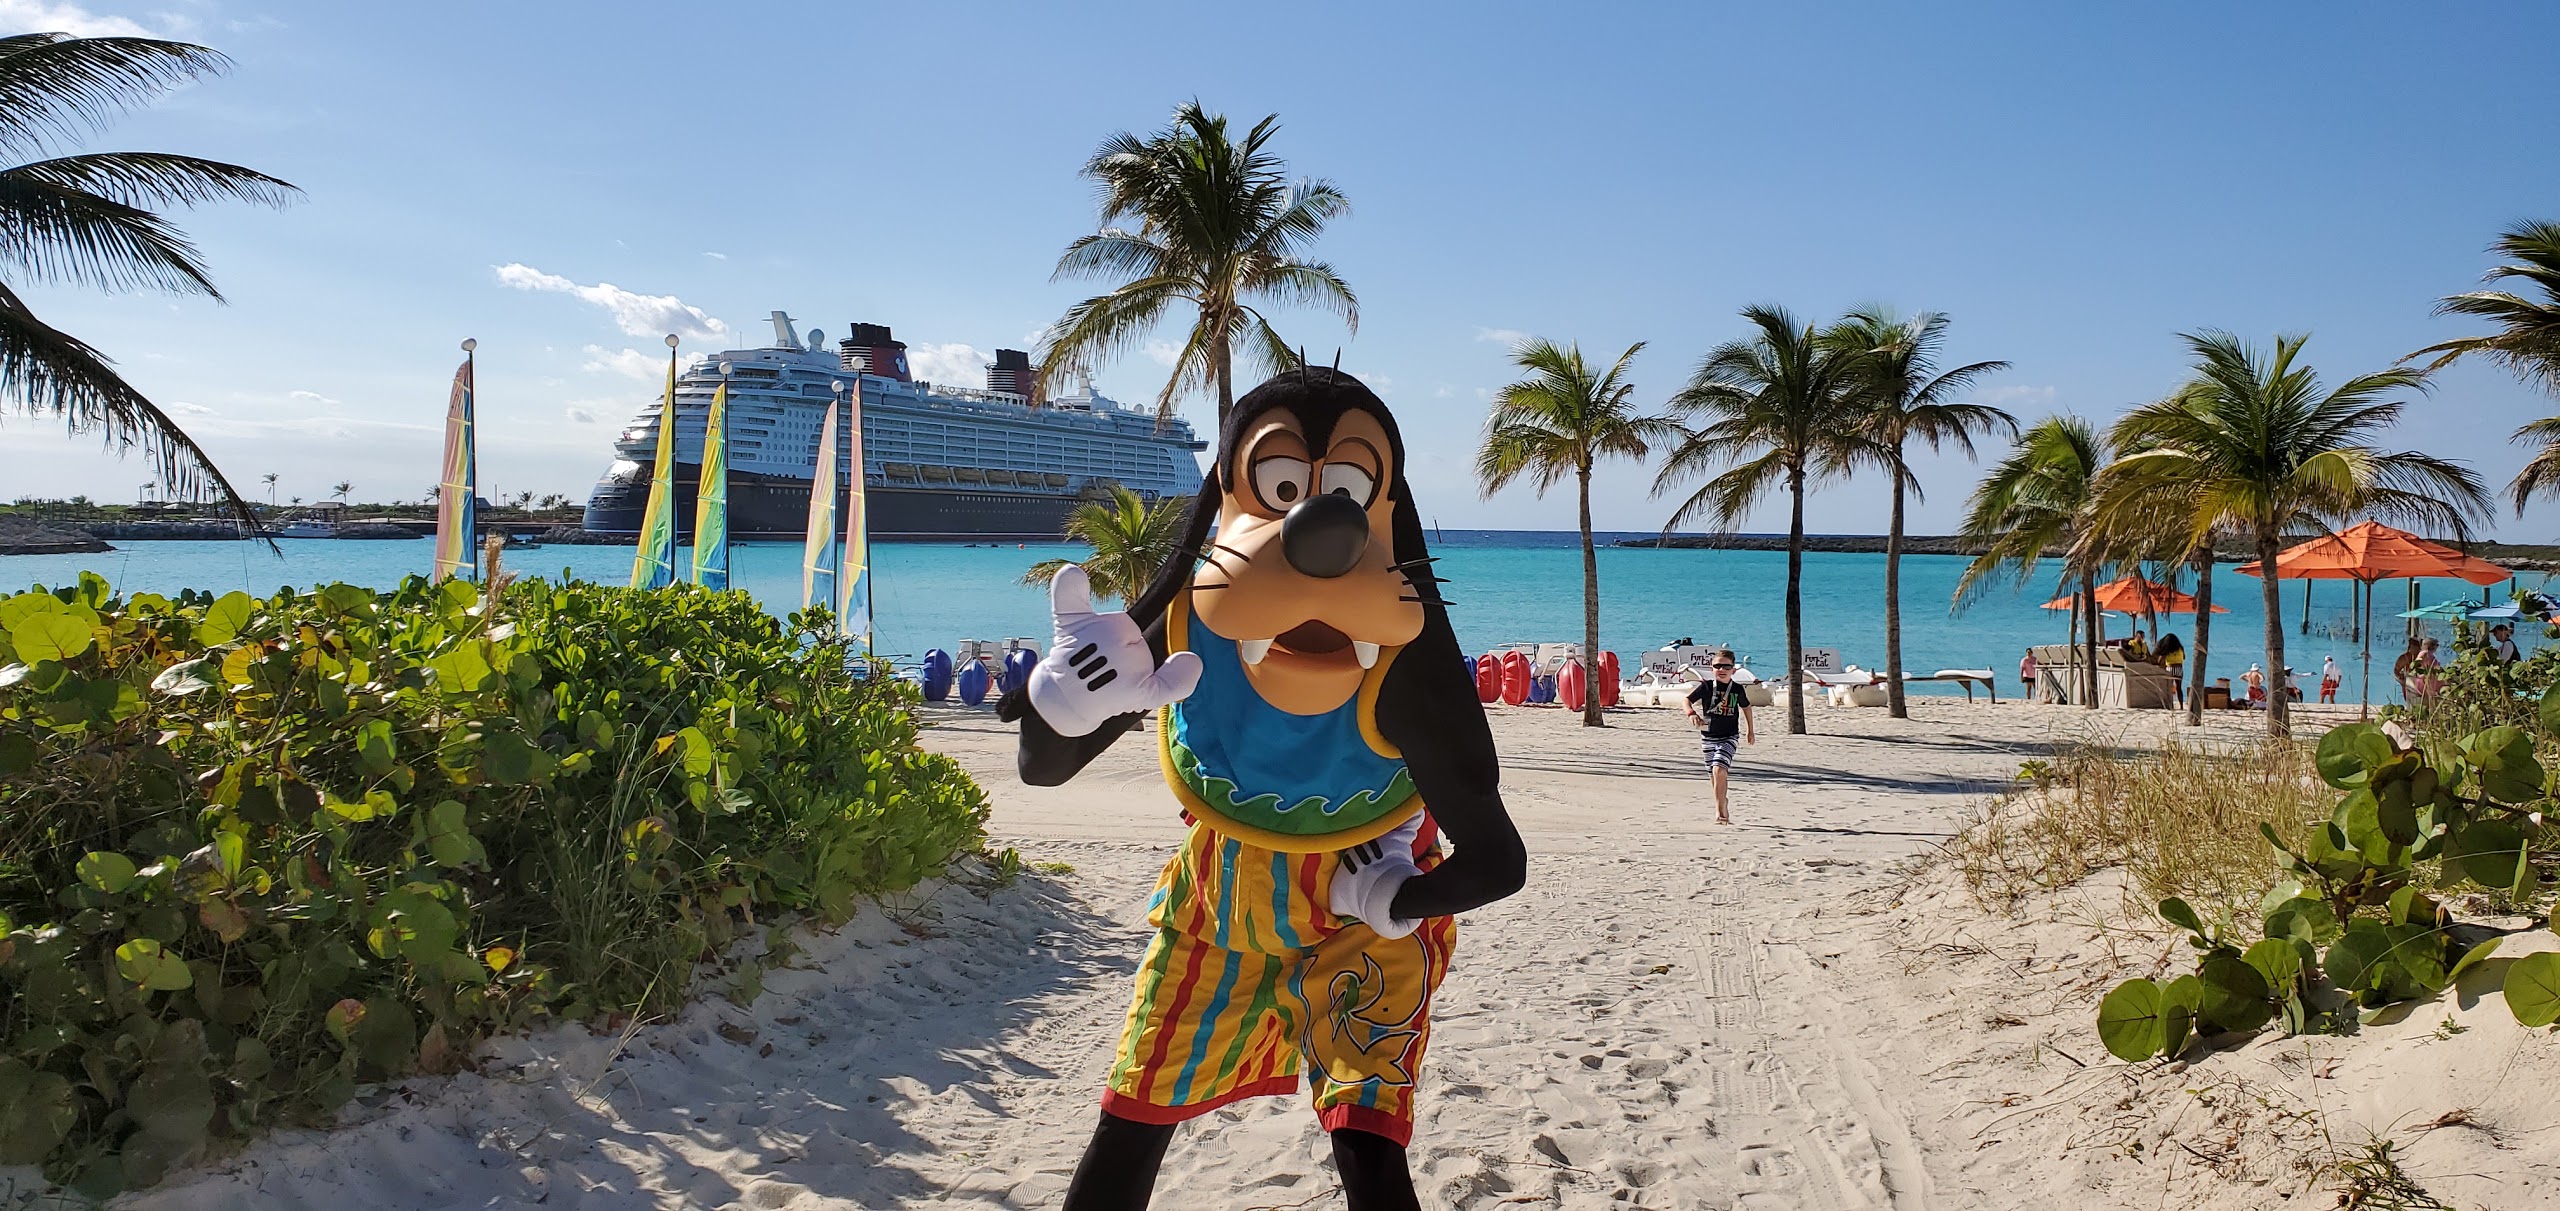 Disney Cruise Line is hiring! Will cruises be returning soon?